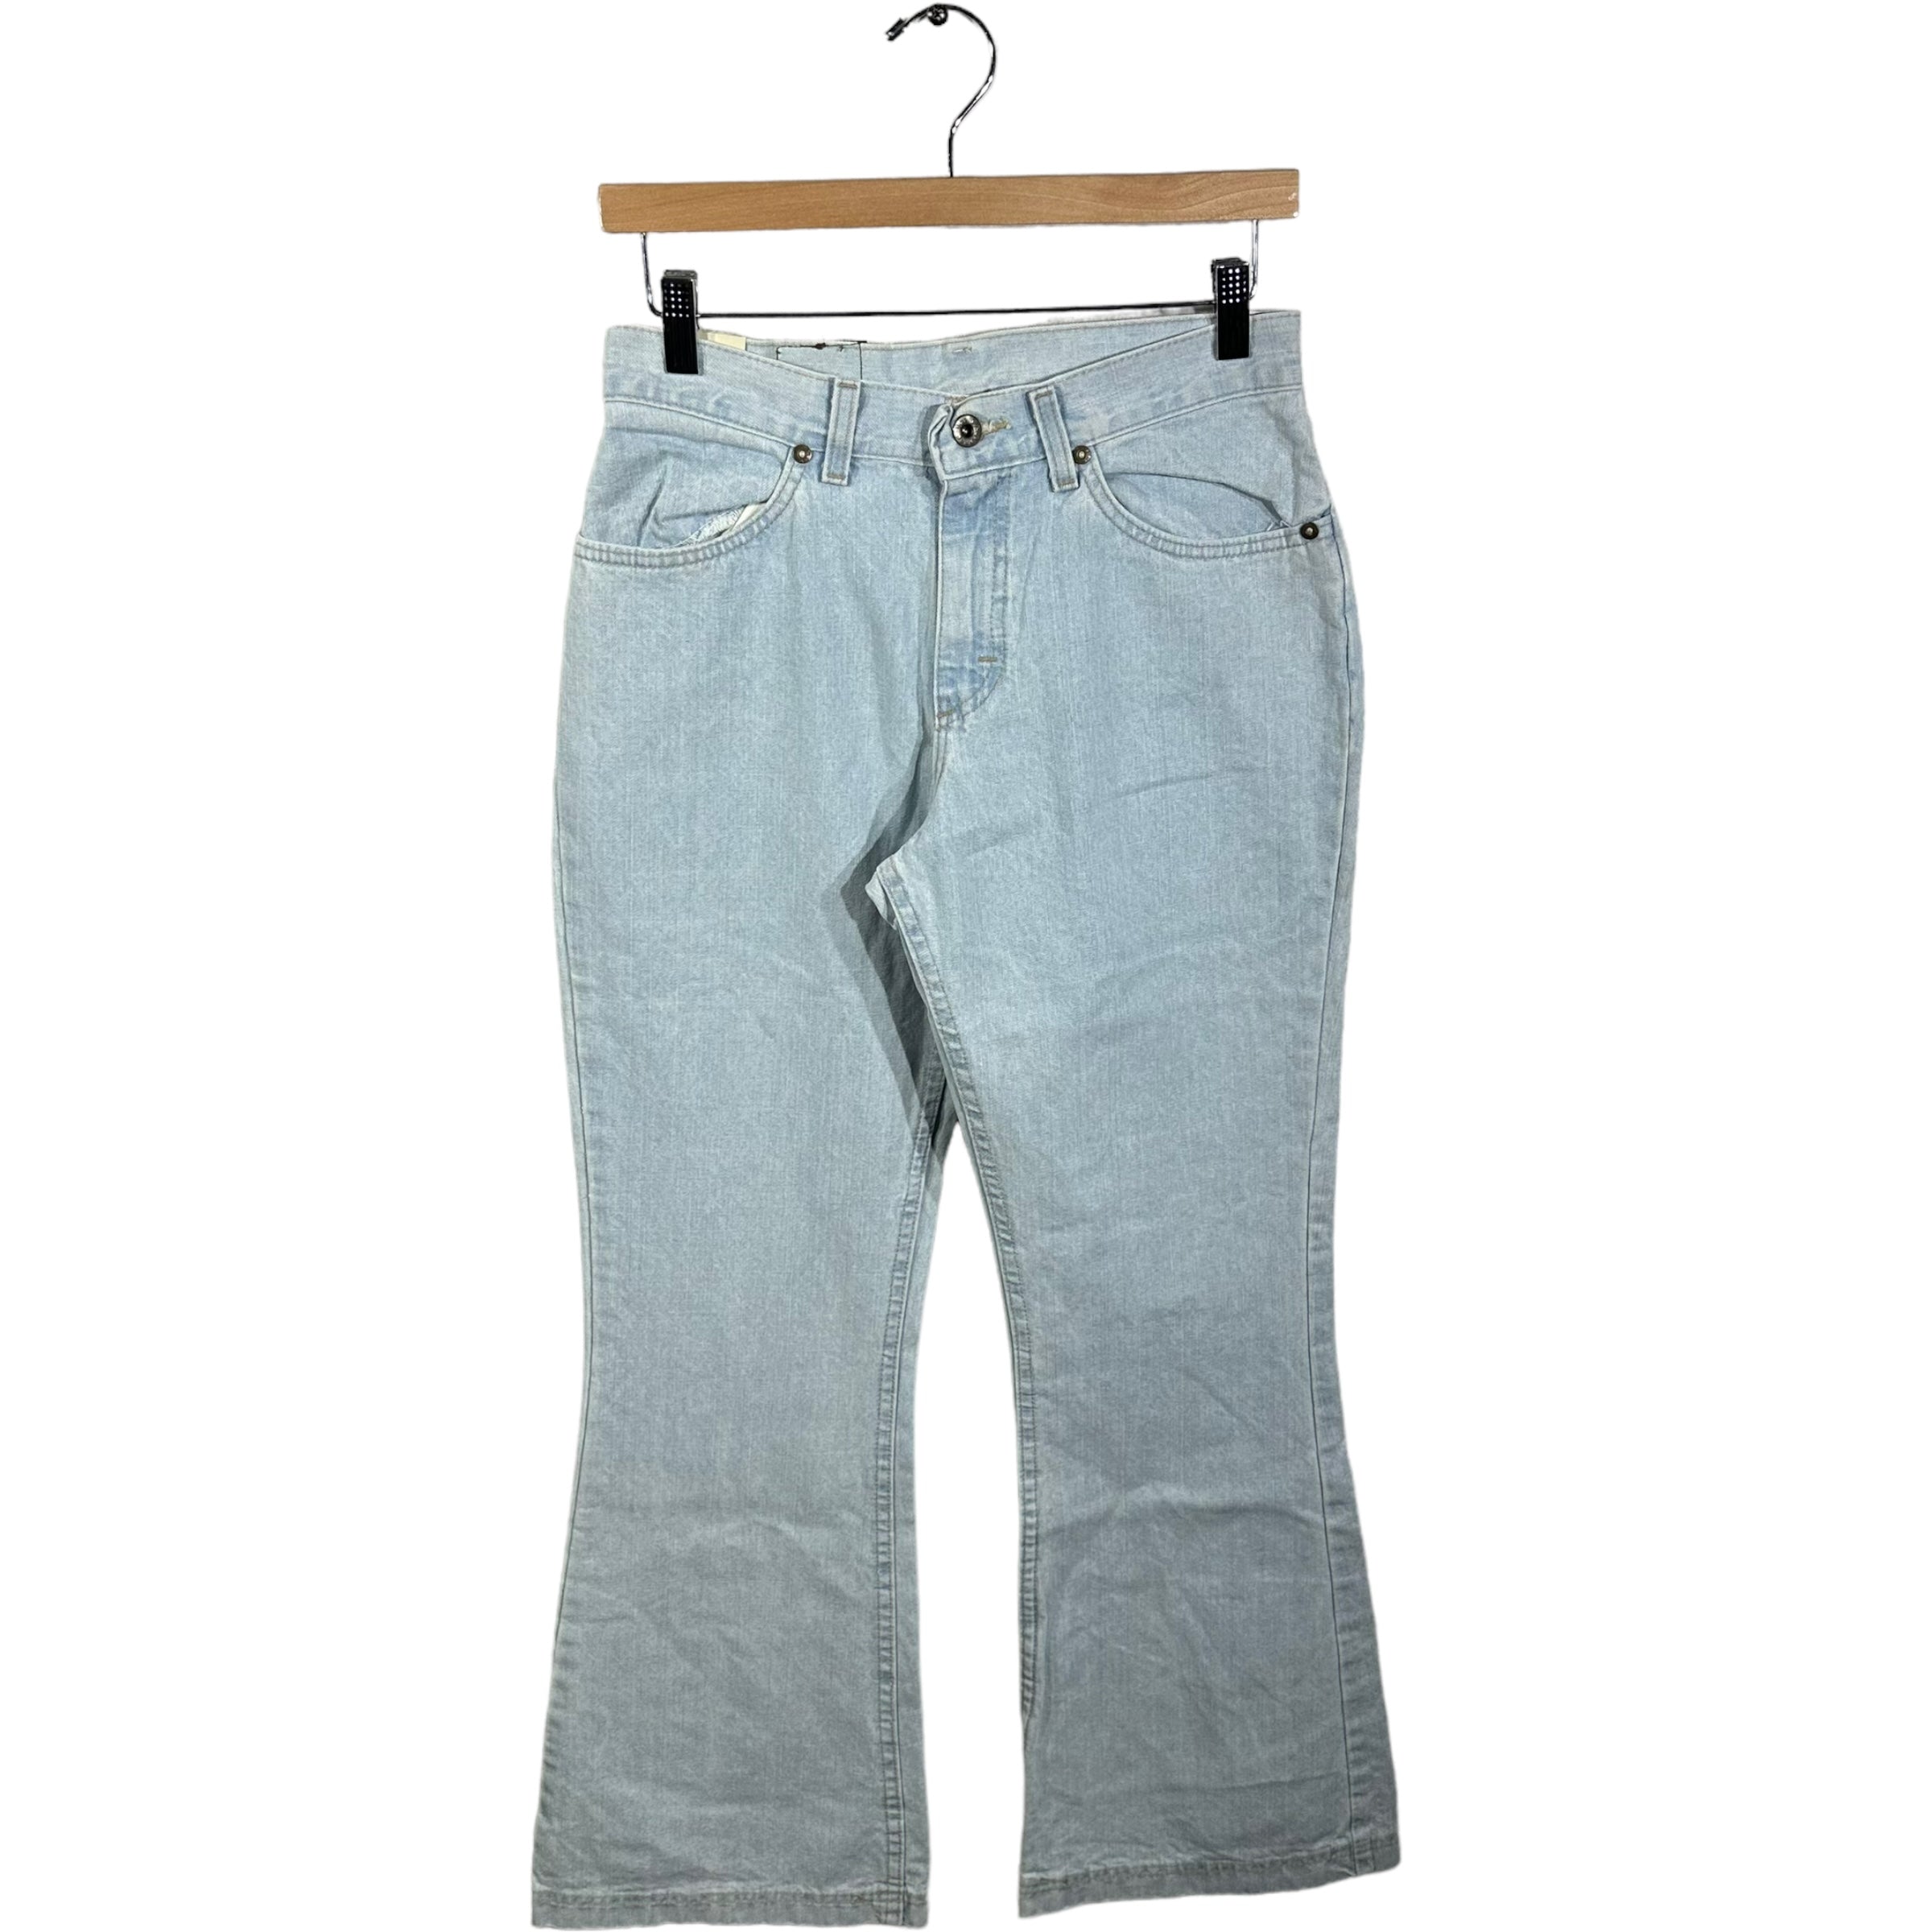 Vintage NWT Lee Dungarees Flared Denim Jeans